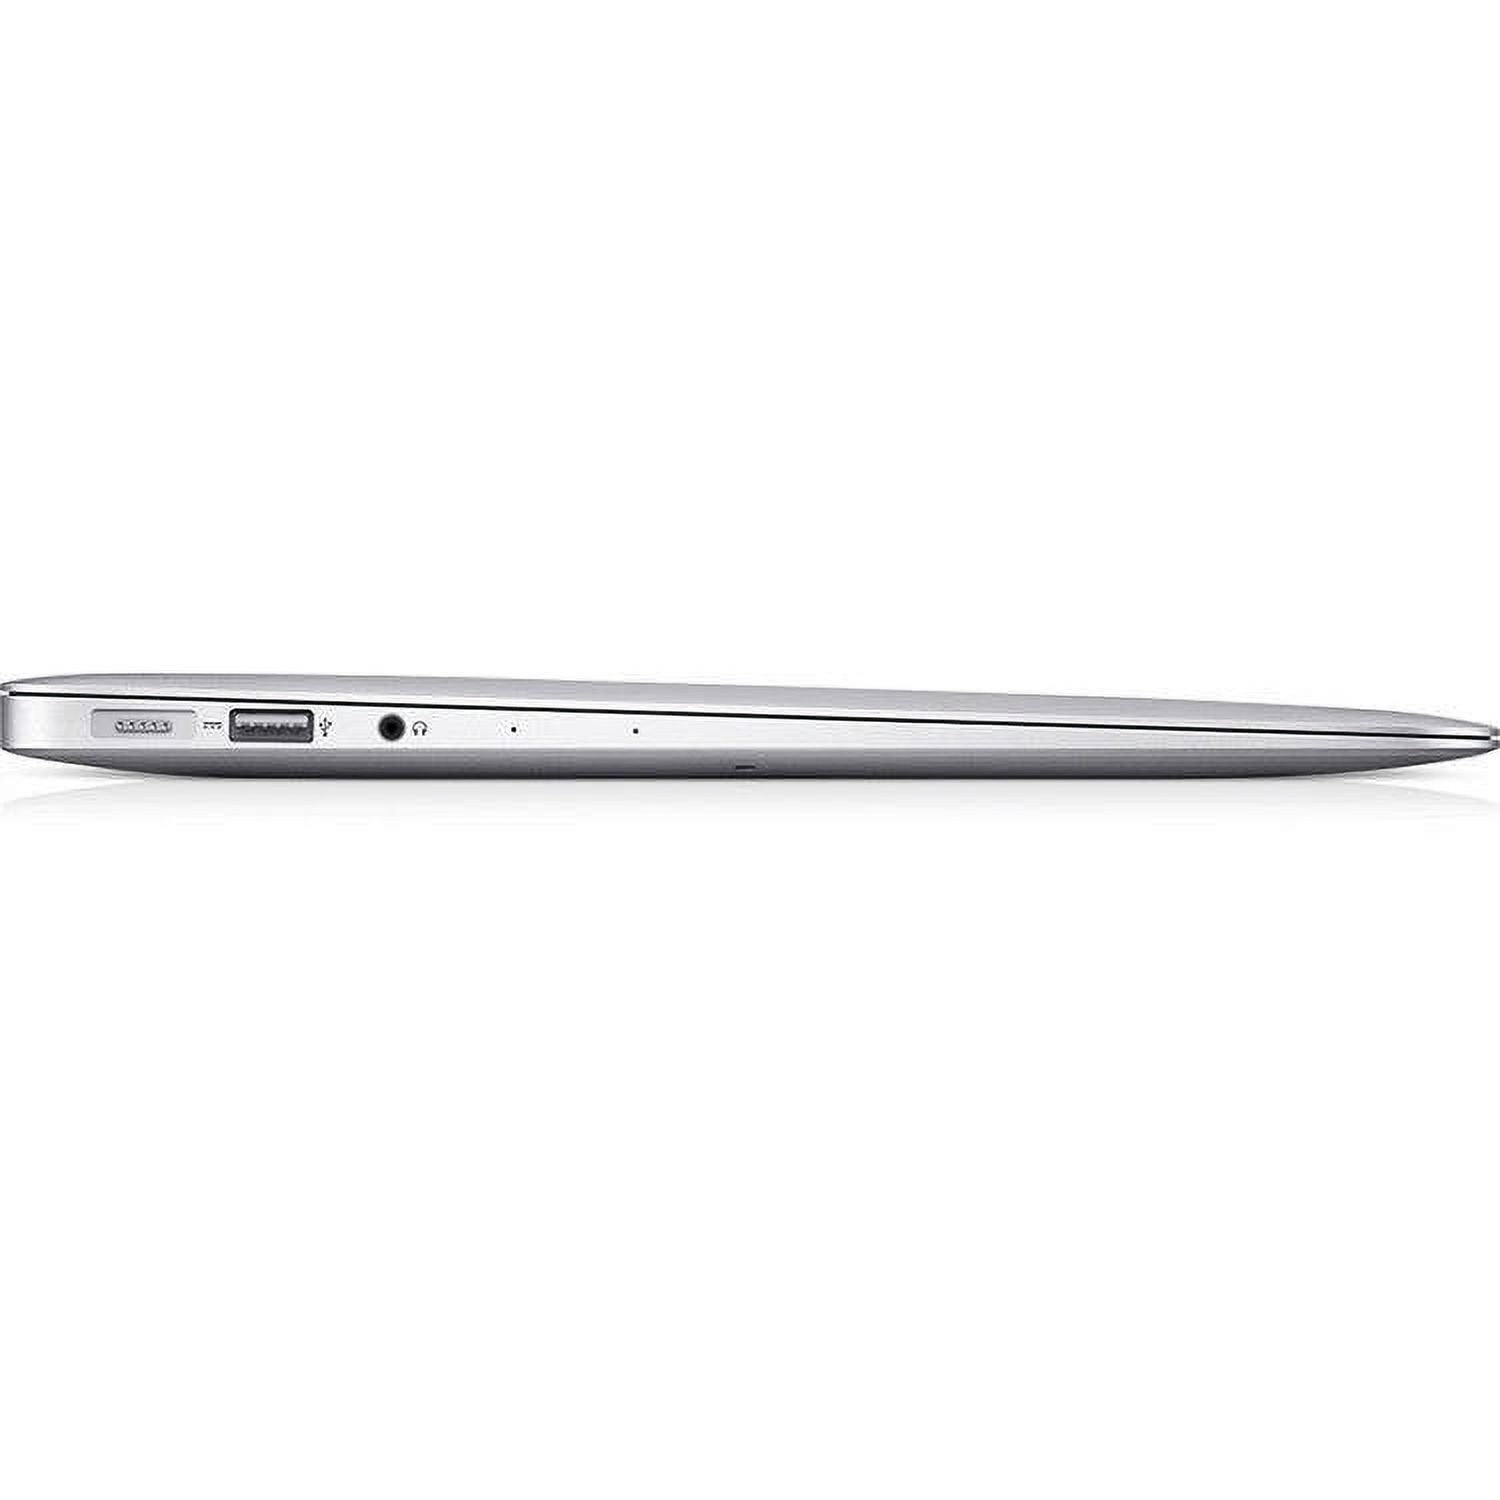 Restored Apple MacBook Air Laptop 13", Intel Core i7, 8GB RAM, 512GB HD, Mac OS 10.15 Catalina, Silver, MF068LL/A (Refurbished) - image 2 of 5